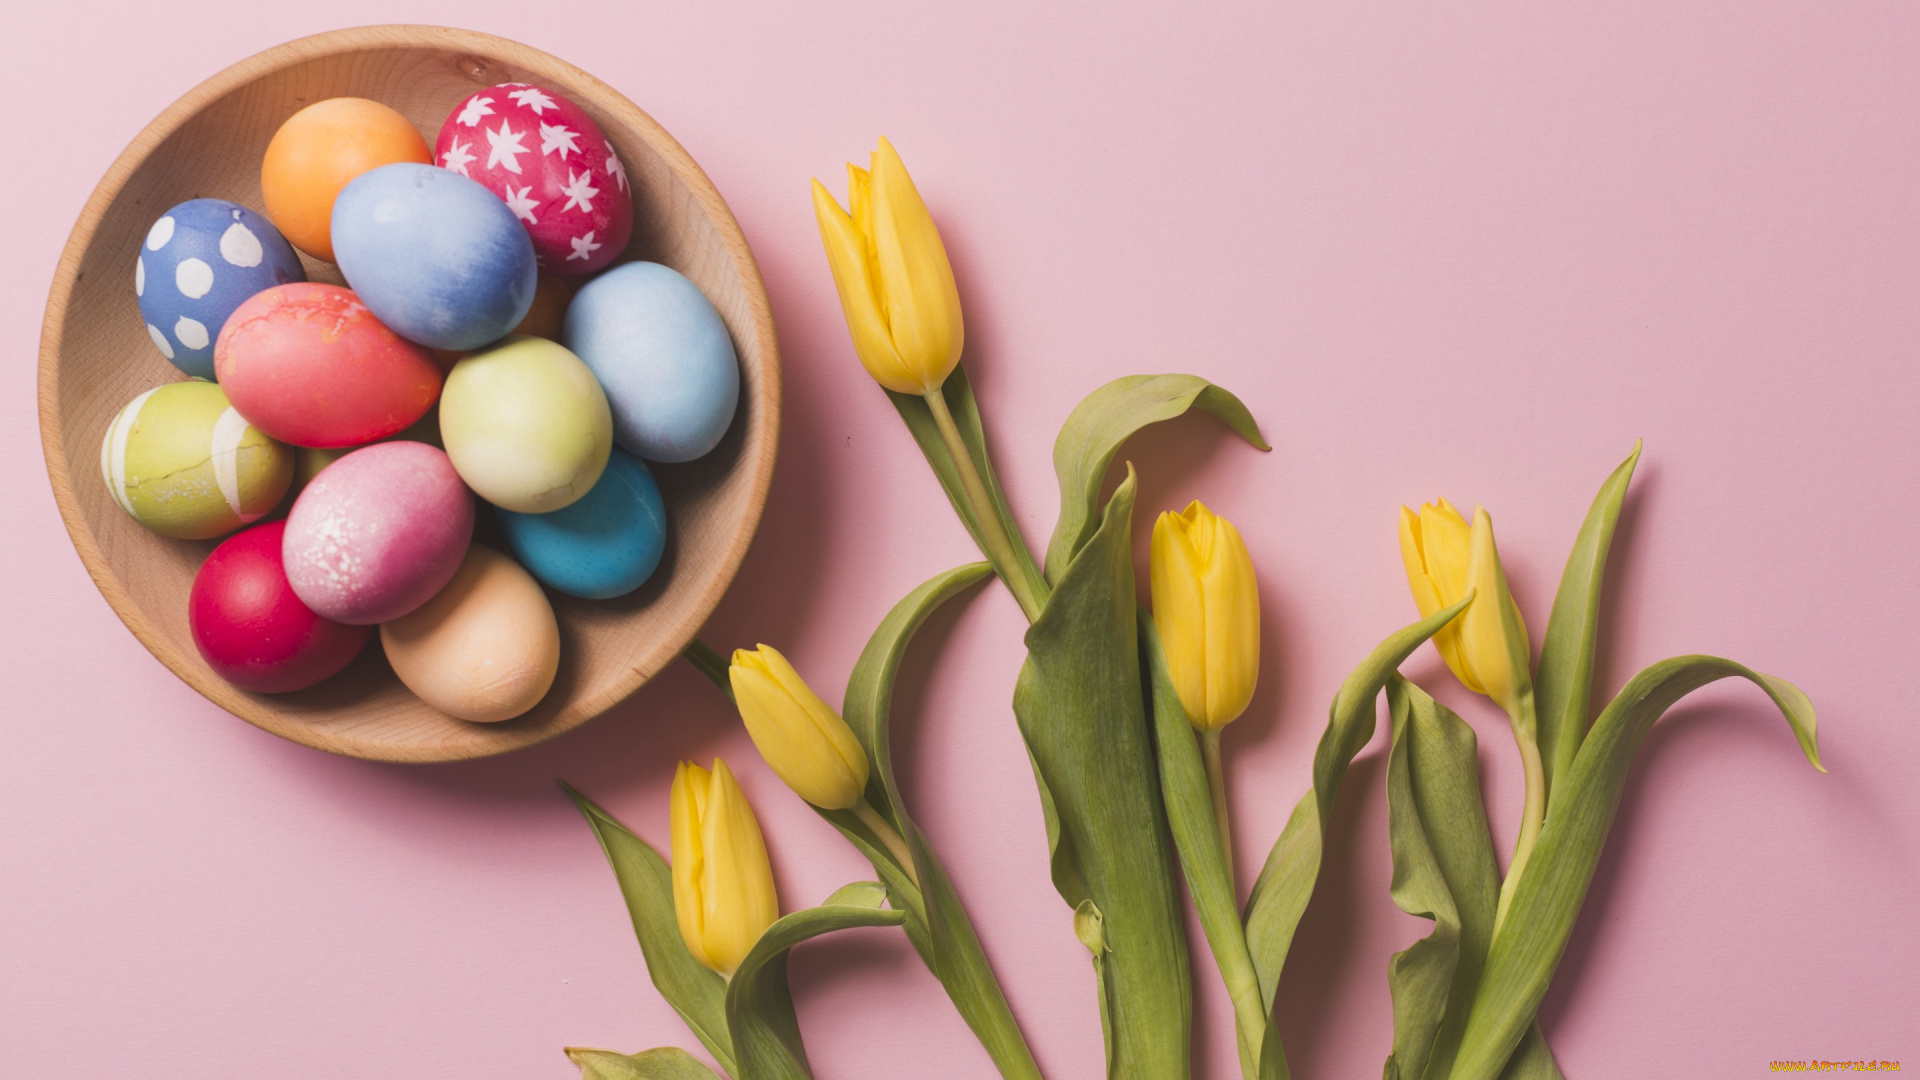 праздничные, пасха, яйца, крашеные, spring, decoration, весна, цветы, yellow, tulips, flowers, тюльпаны, easter, желтые, happy, eggs